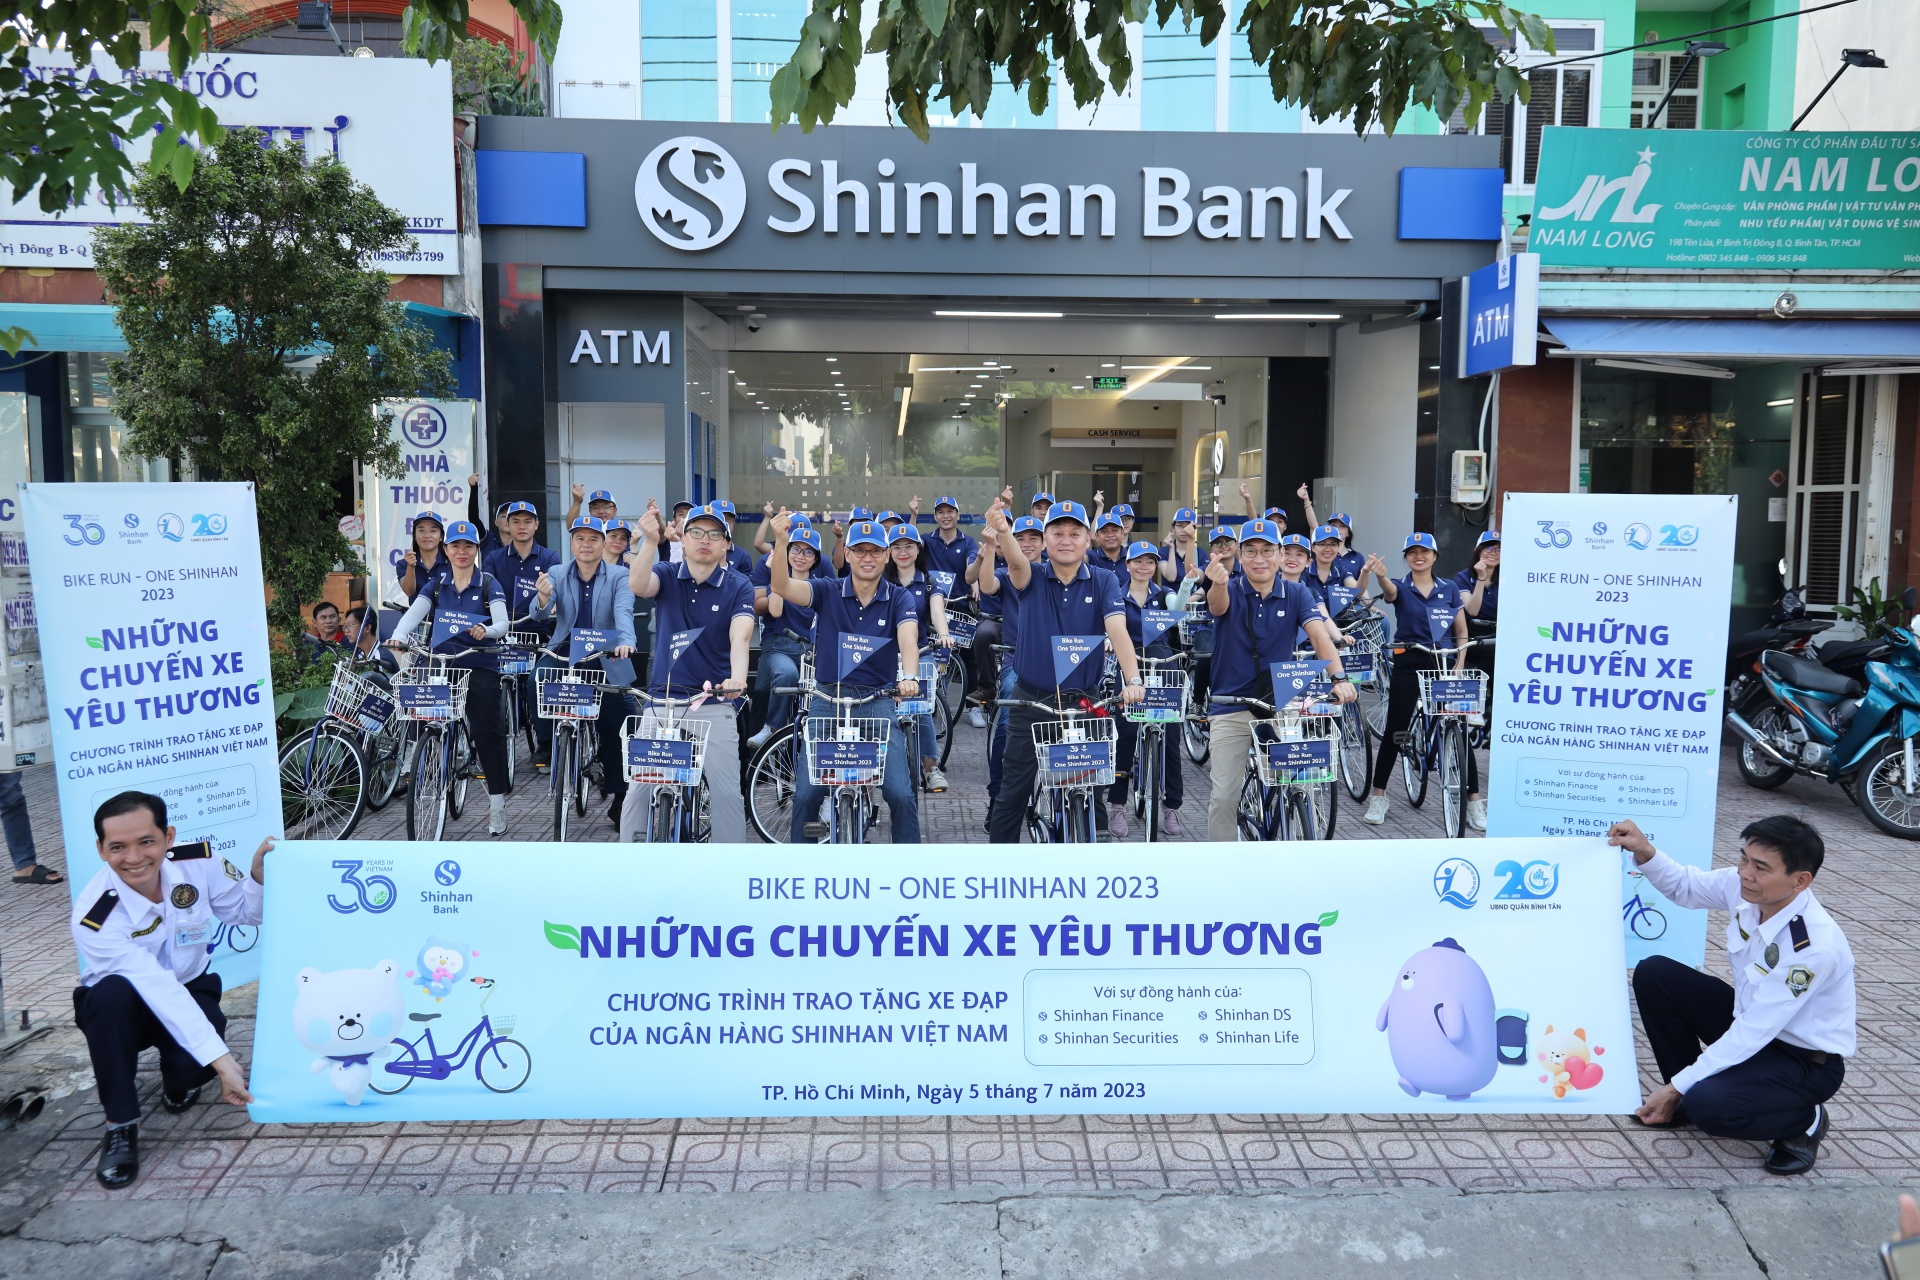 Shinhan Bank Vietnam celebrates 30 years in Vietnam